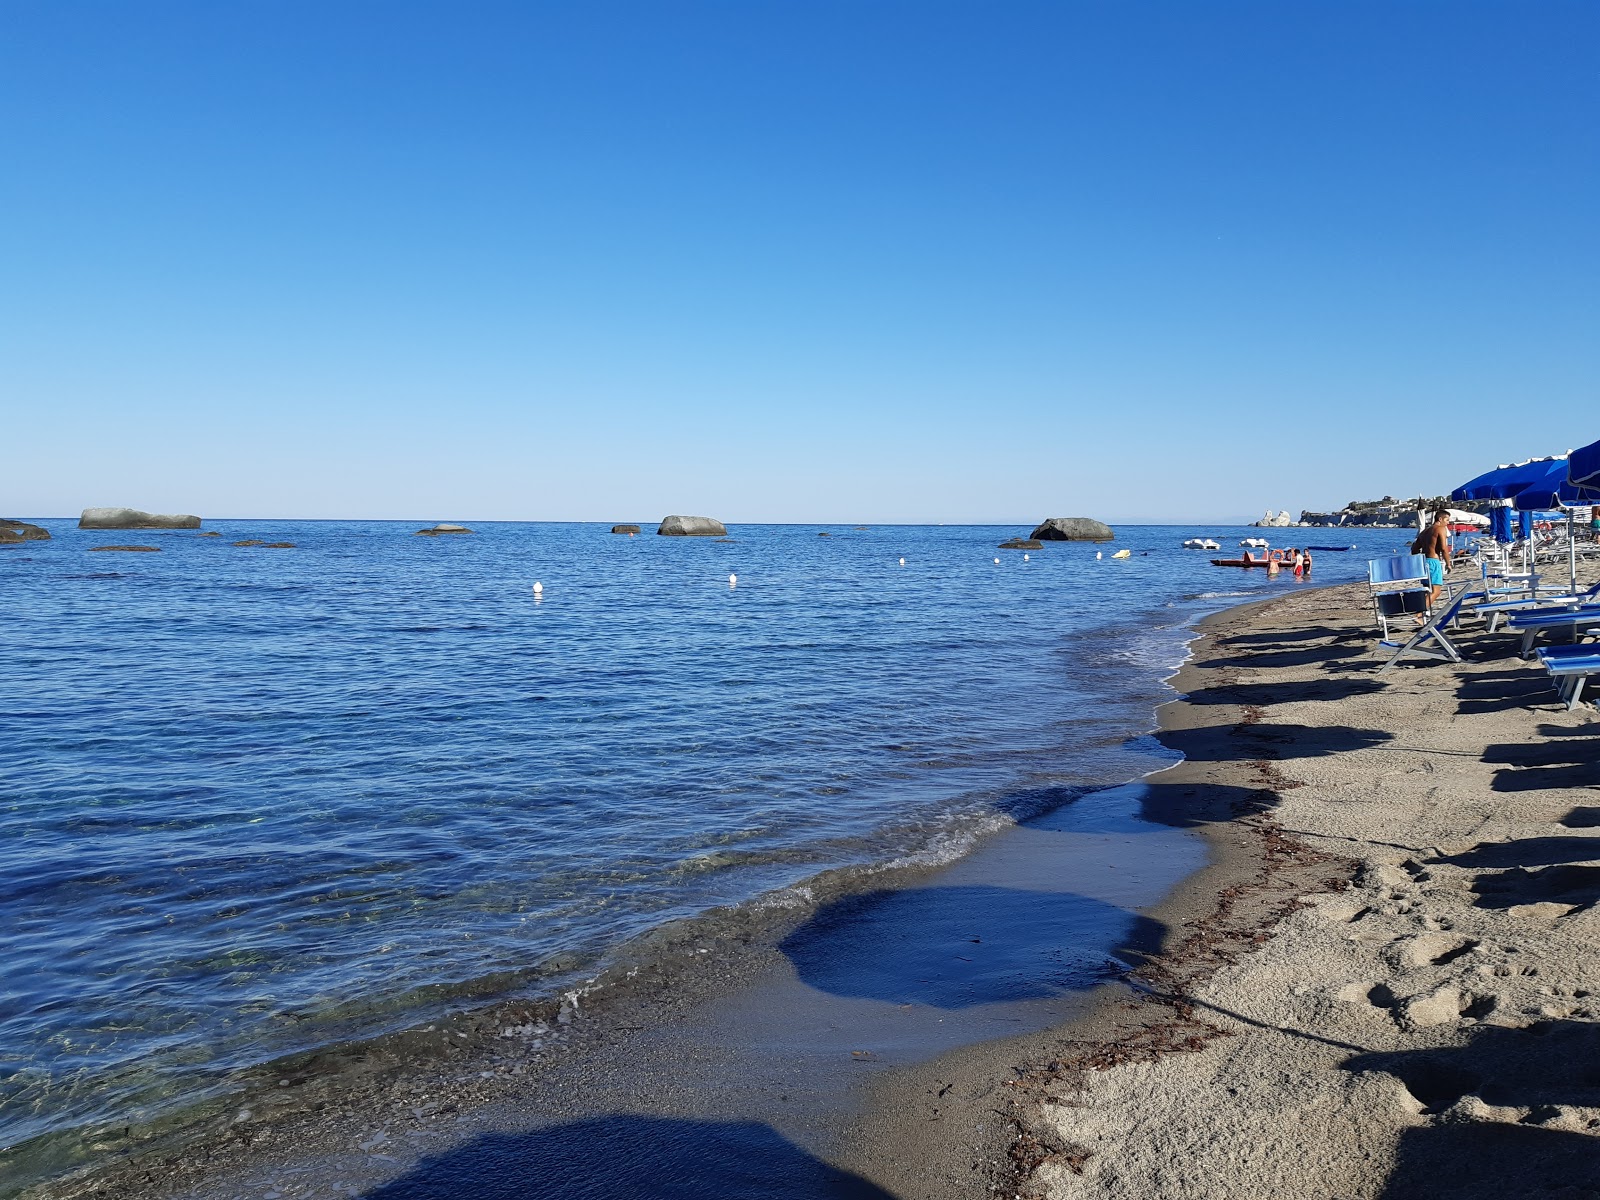 Foto von Spiaggia Di Citara mit geräumiger strand